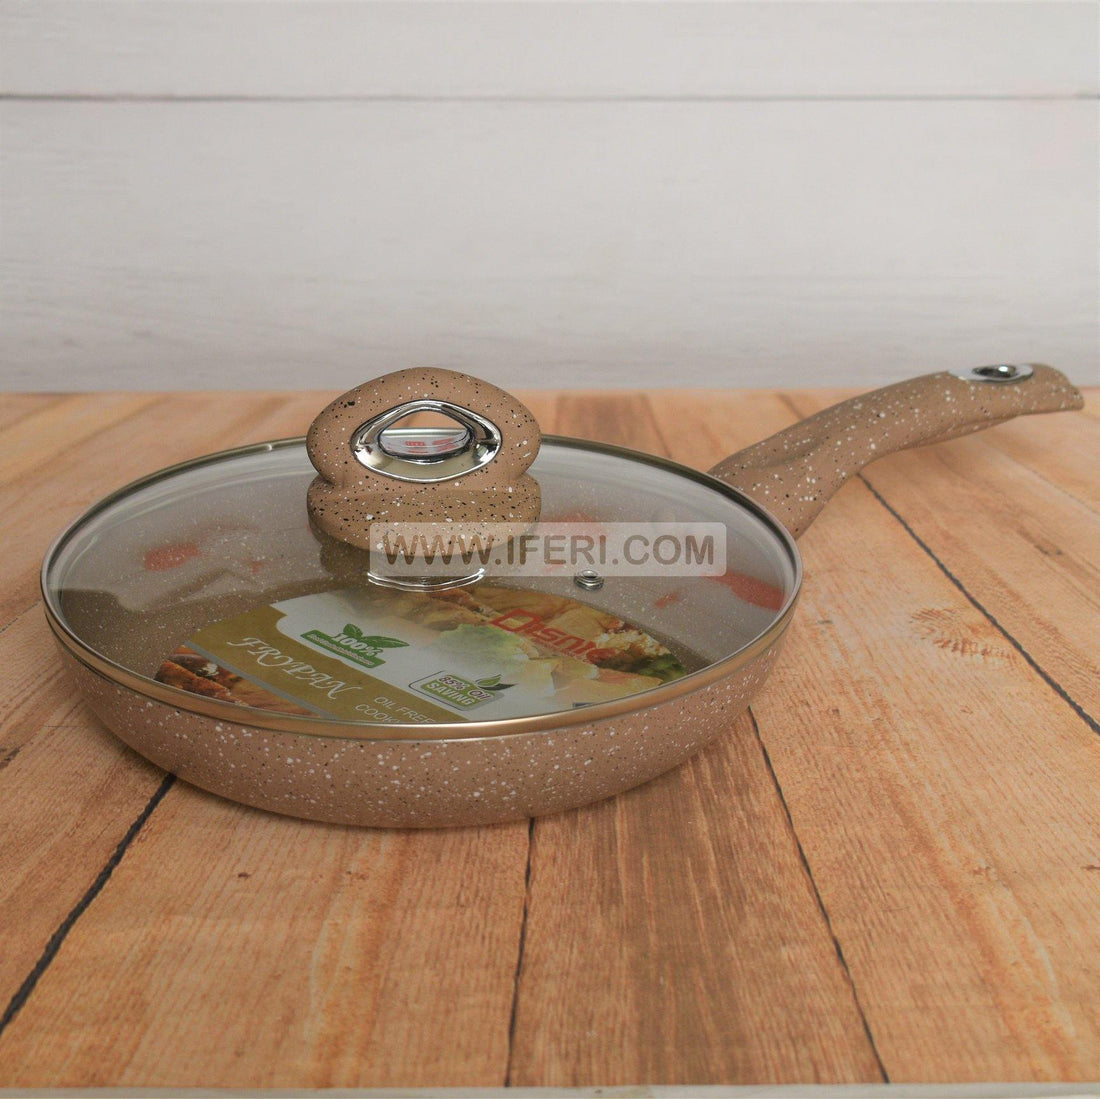 28cm Marble Coating Frying Pan with Lid UT5212 - Price in BD at iferi.com